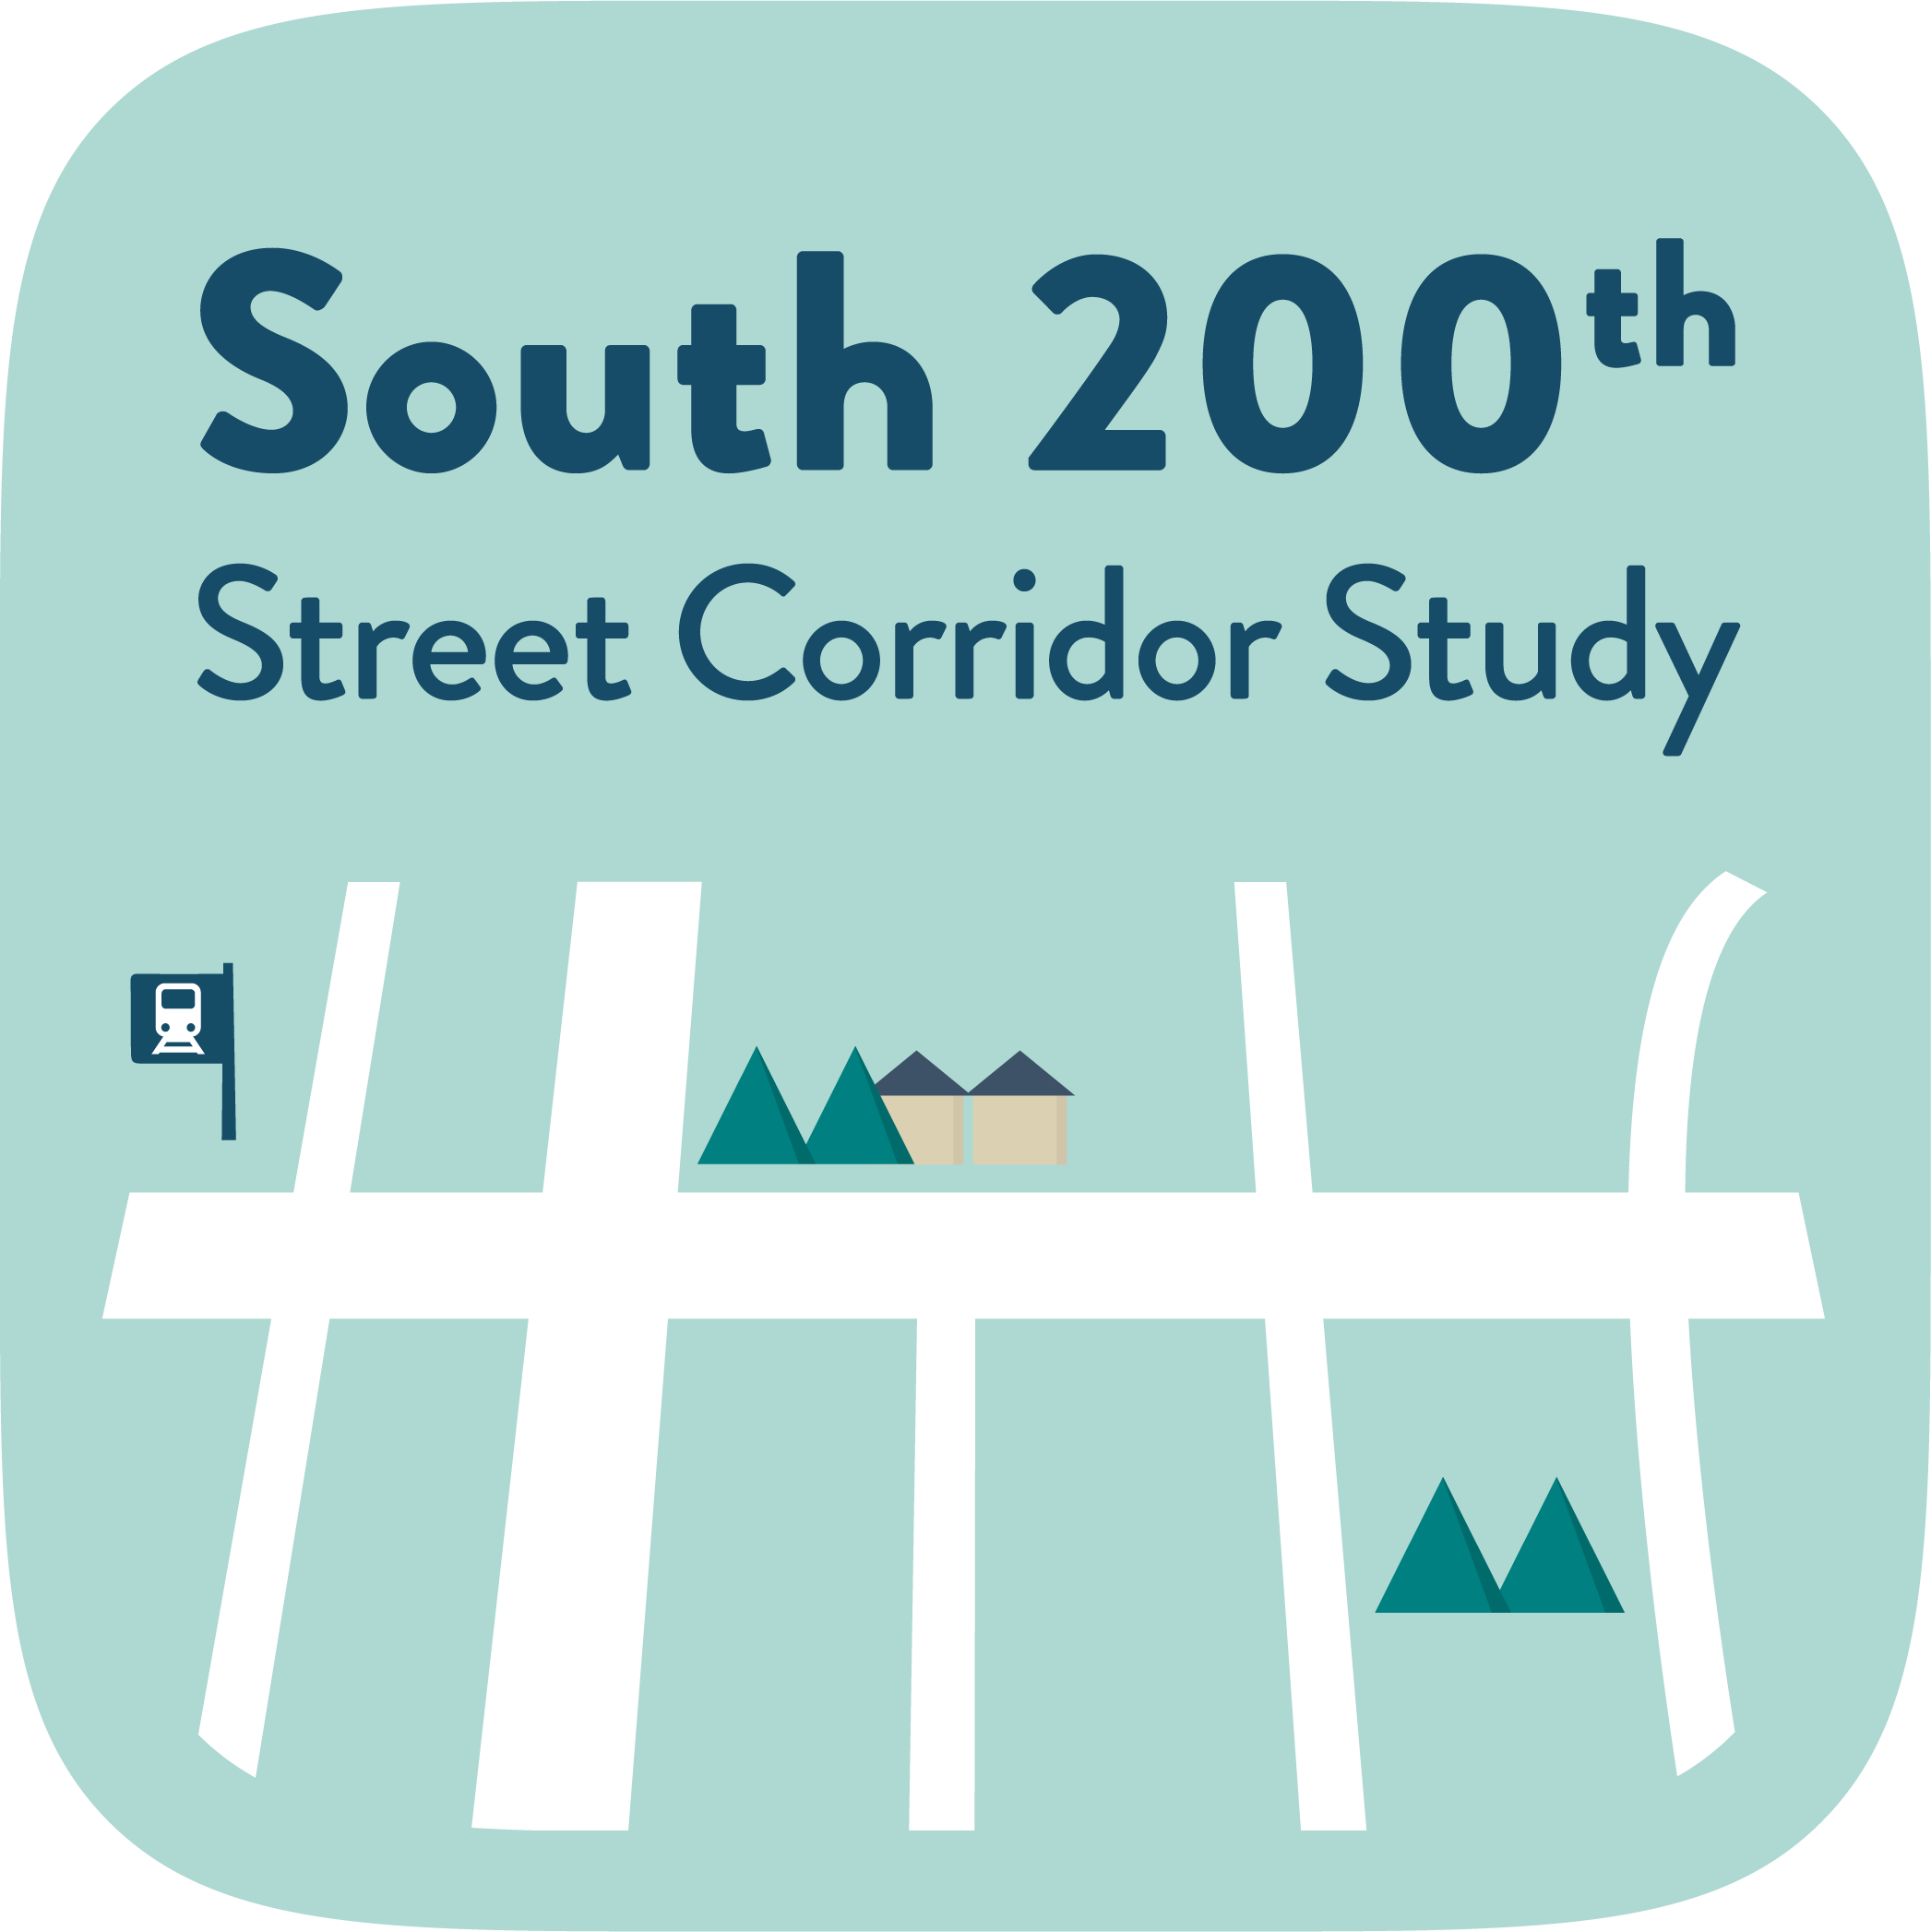 South 200th Street Corridor Study